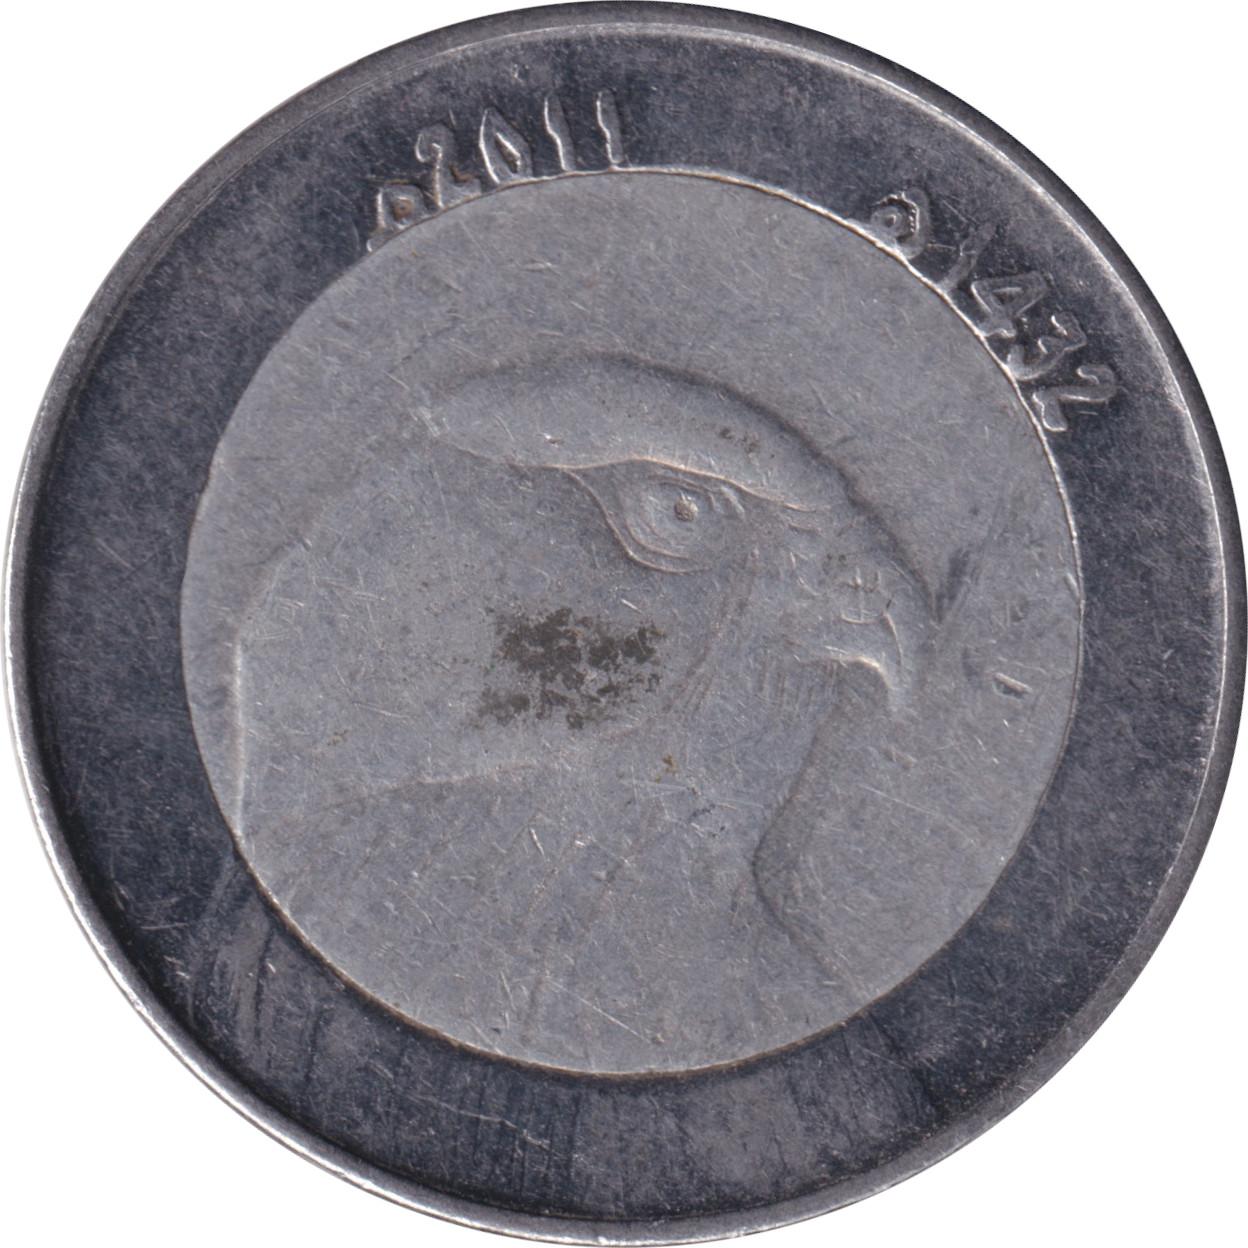 10 dinars - Eagle